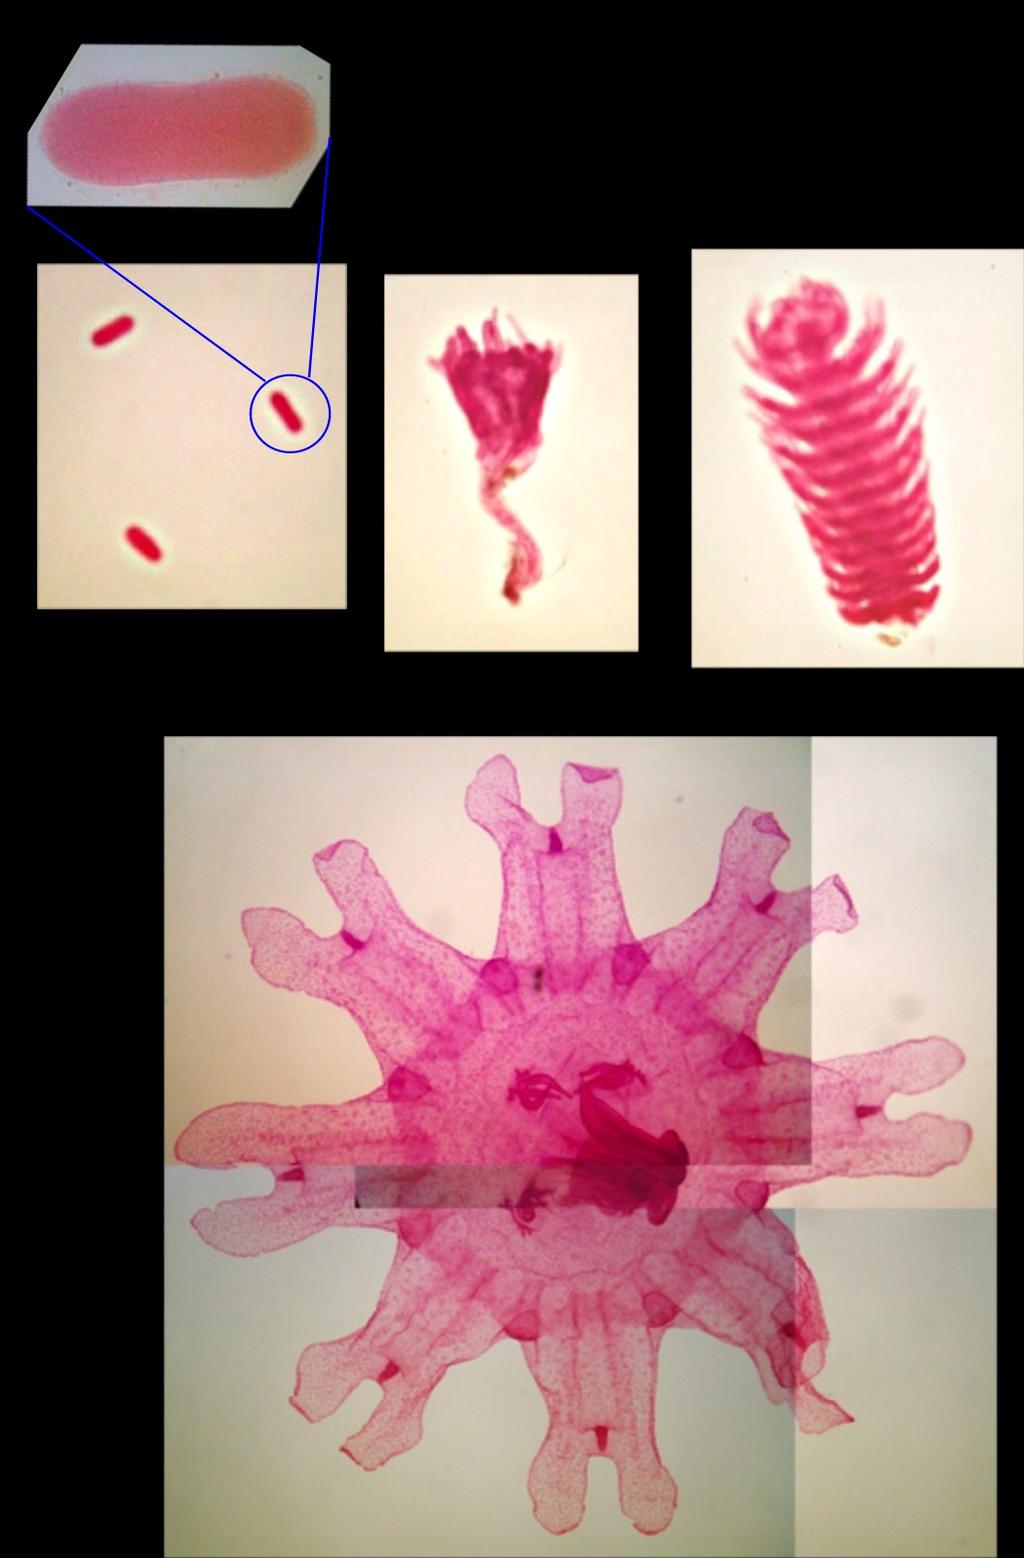 P S St PHYLUM Cnidaria CLASS Scyphozoa Life Cycle Stages 2 Medusae produce gametes Egg + sperm = zygote E